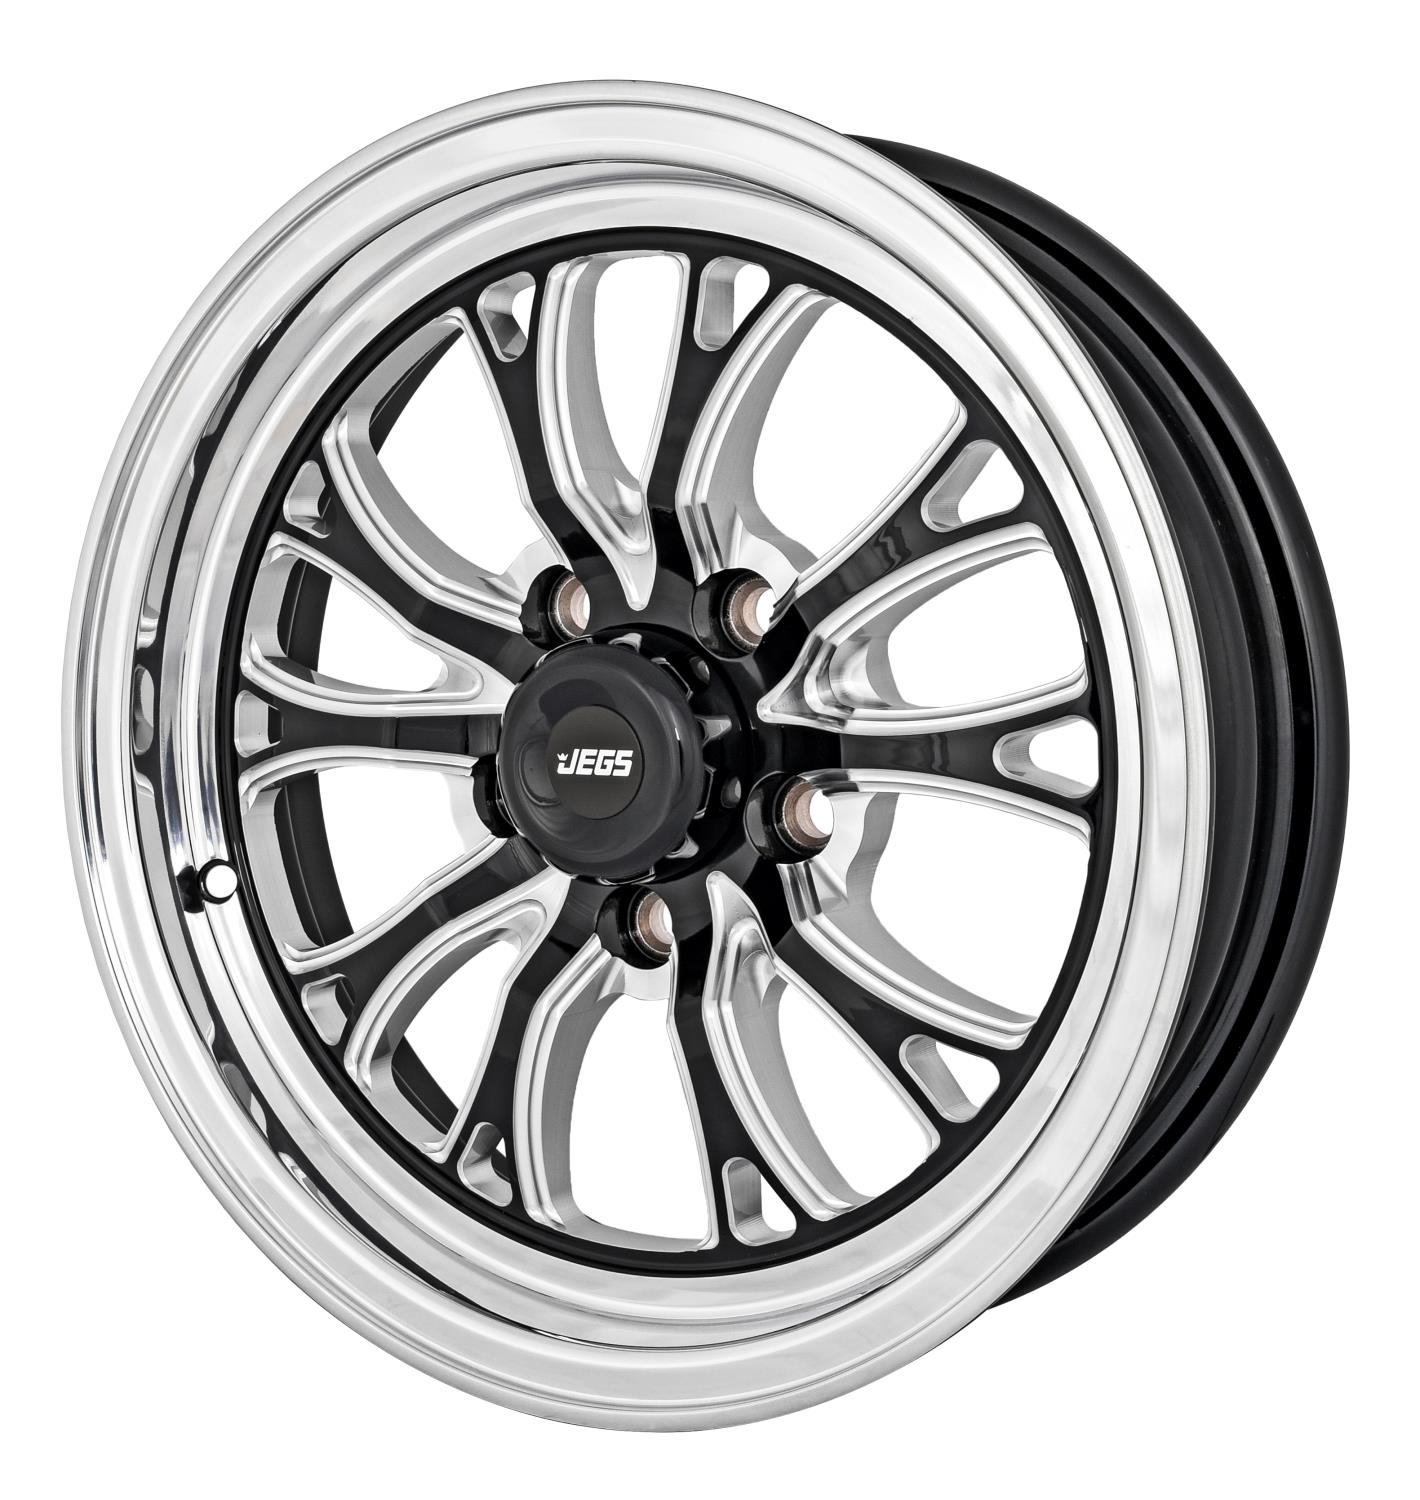 SSR Spike Wheel [Size: 15" x 4"] Polished Lip with Black Milled Spokes